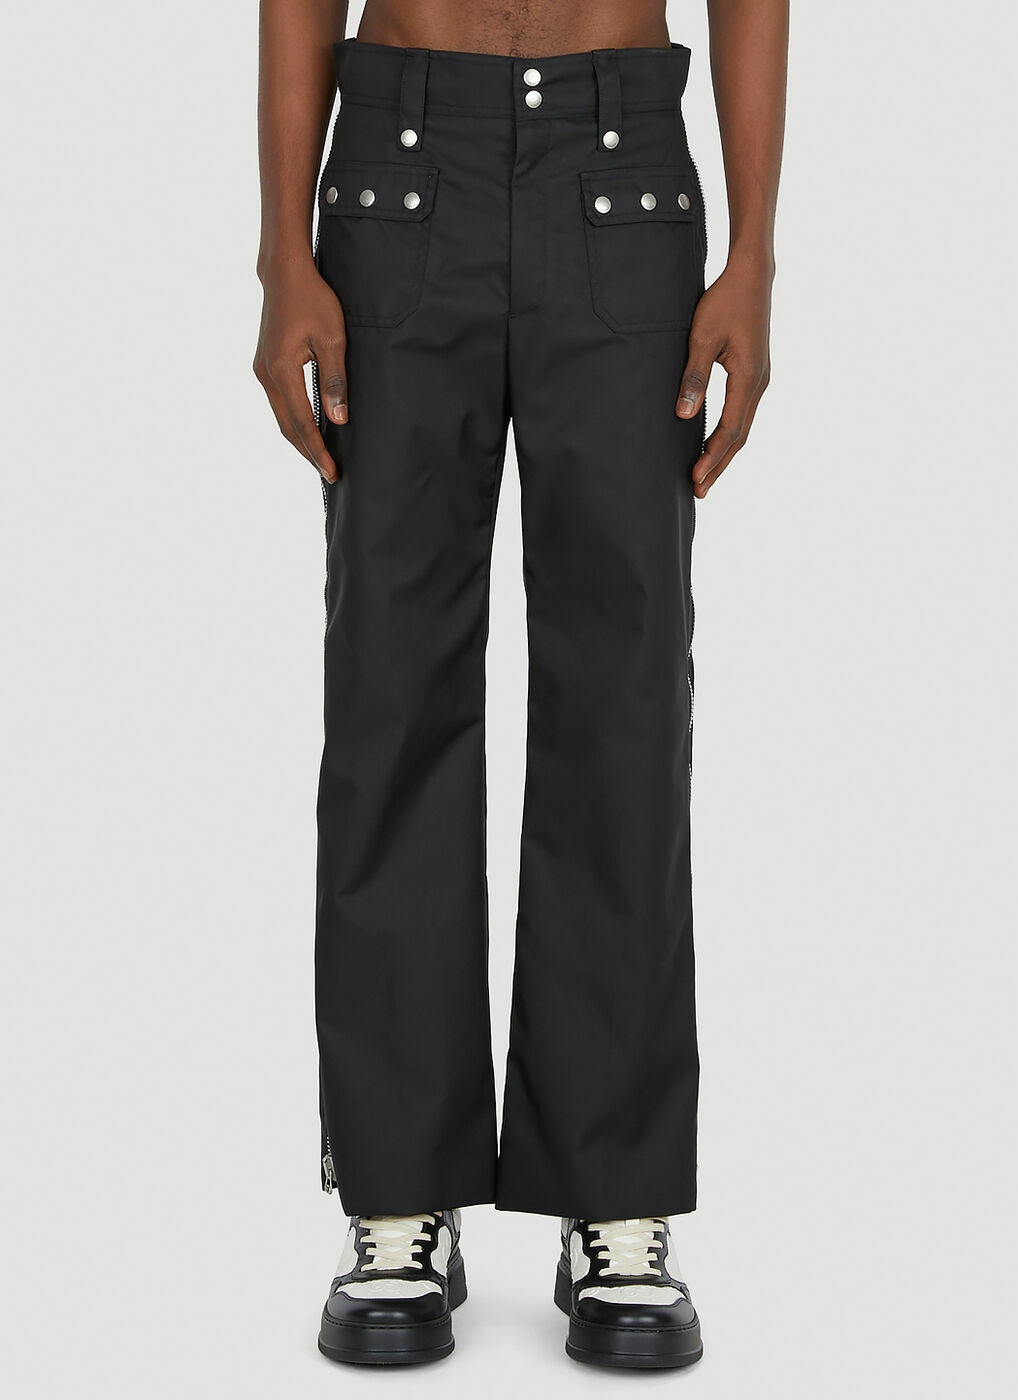 Side Zip Pants in Black Gucci